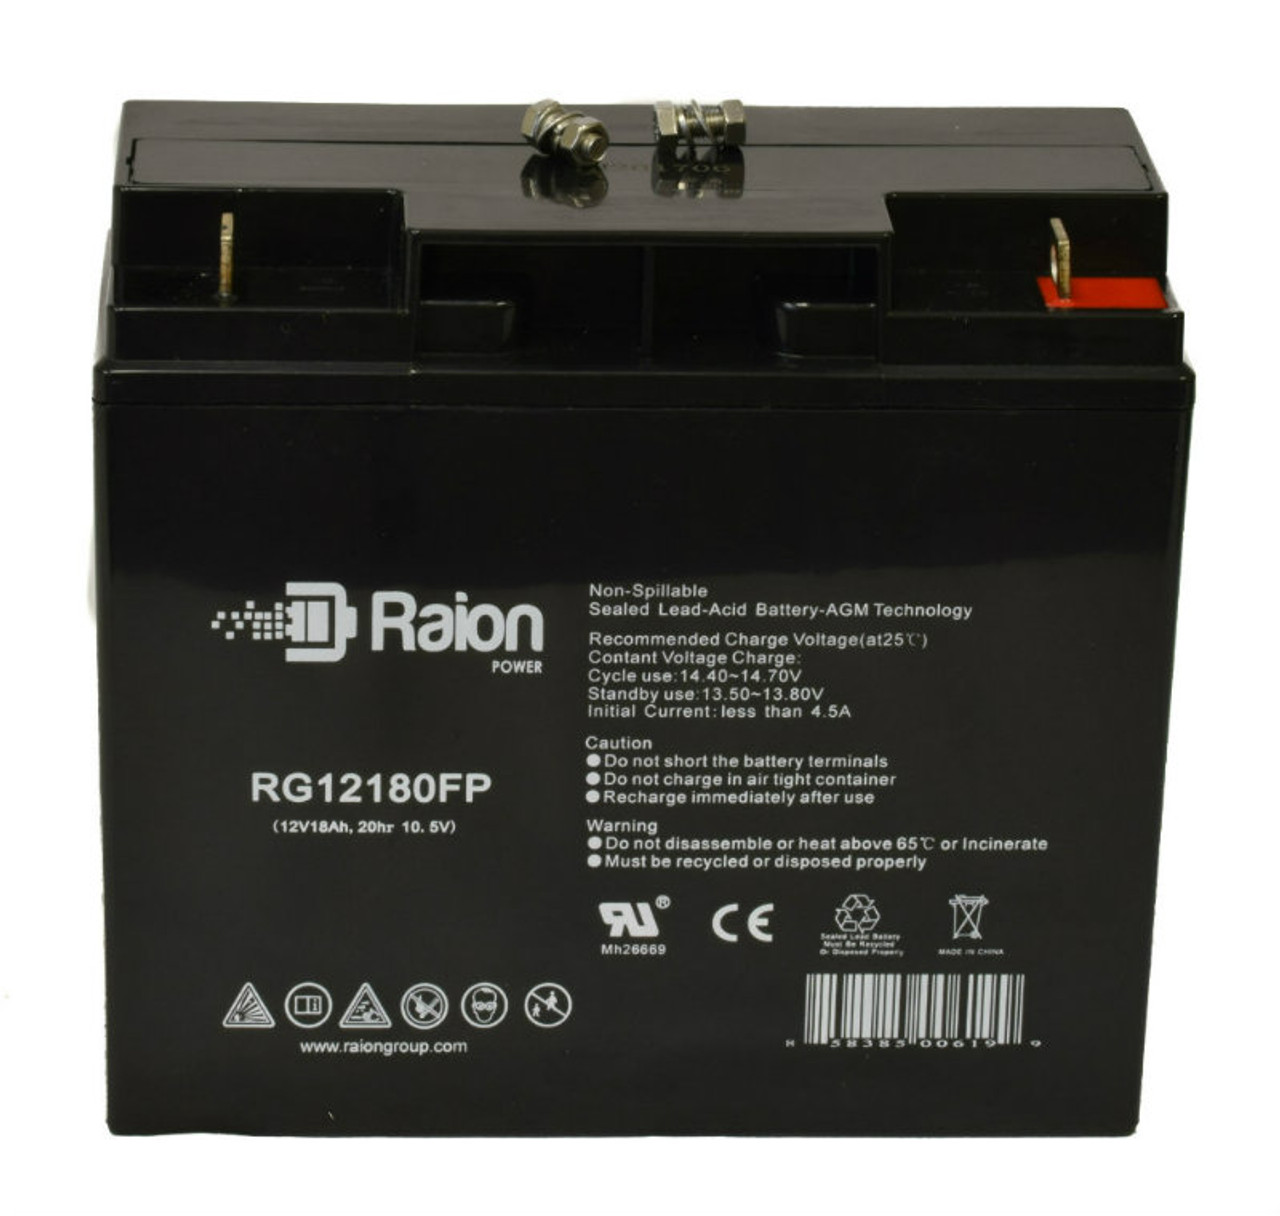 Raion Power RG12180FP 12V 18Ah Lead Acid Battery for SigmasTek SP12-18